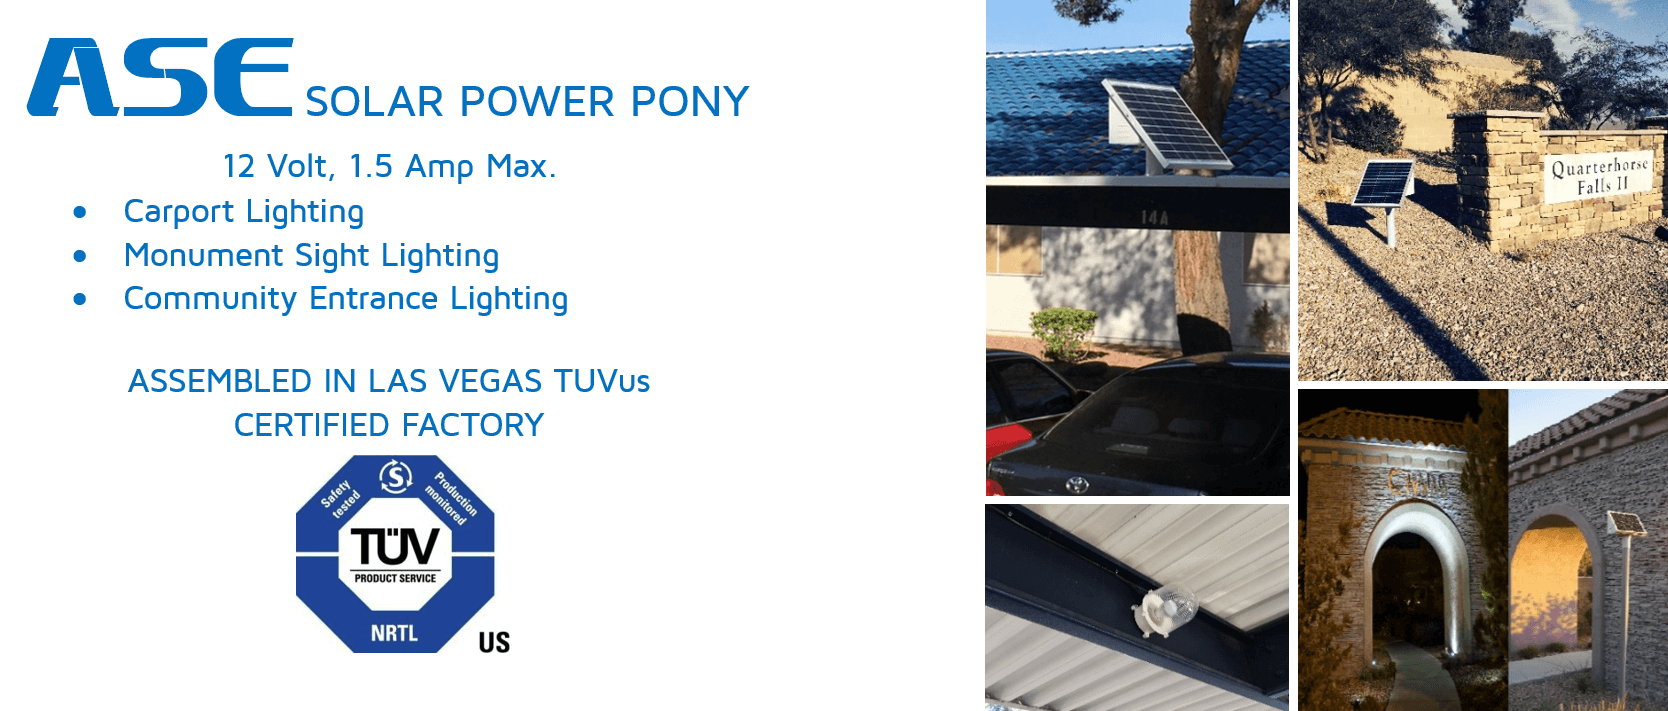 Solar power pony main page